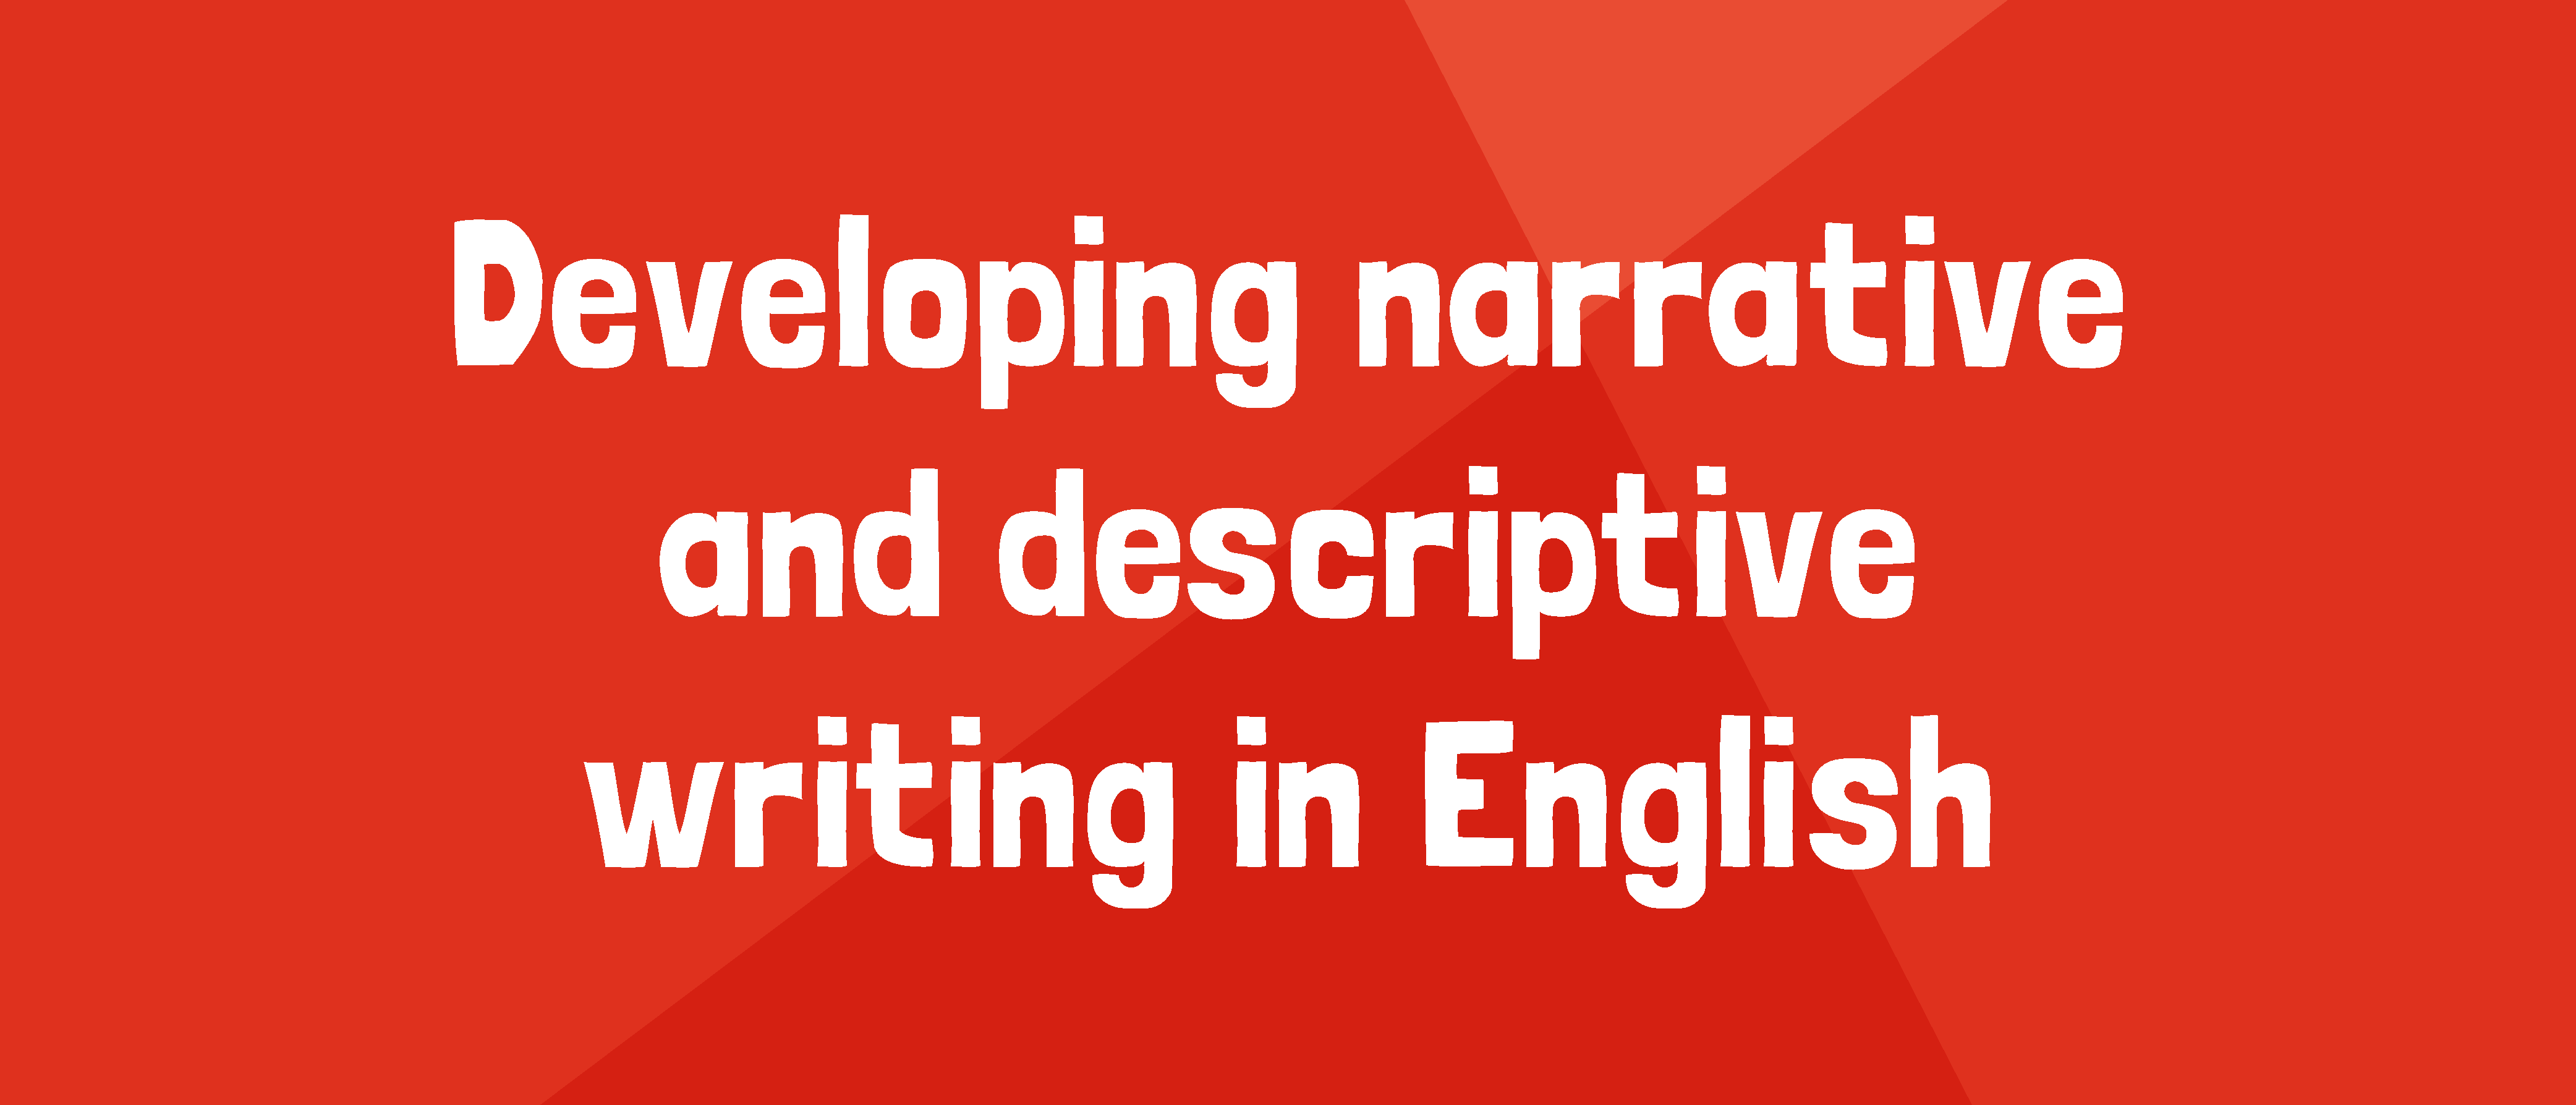 narrative and descriptive writingWEB_BANNER-combined30.png